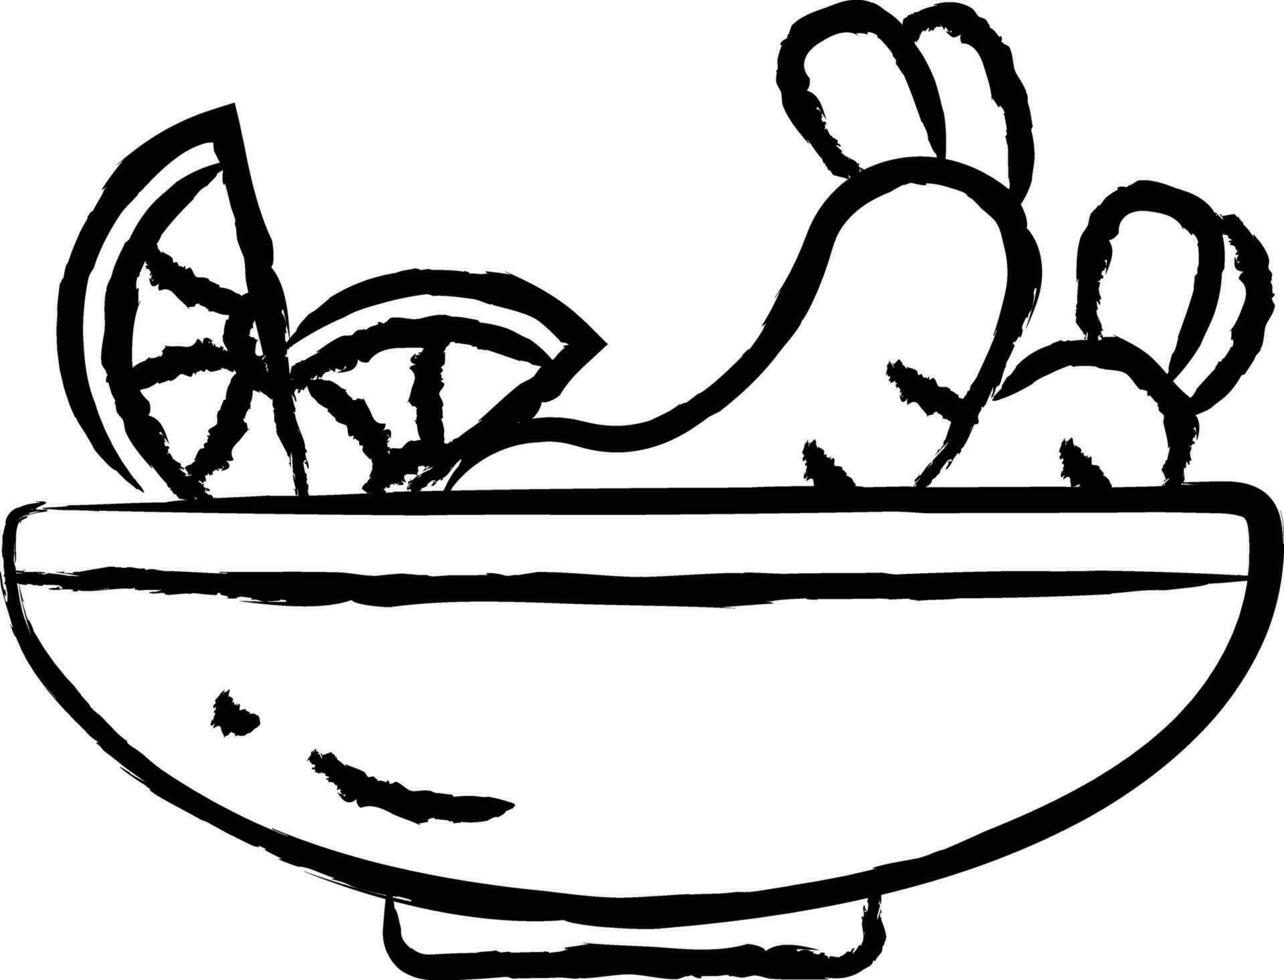 Ceviche hand drawn vector illustration